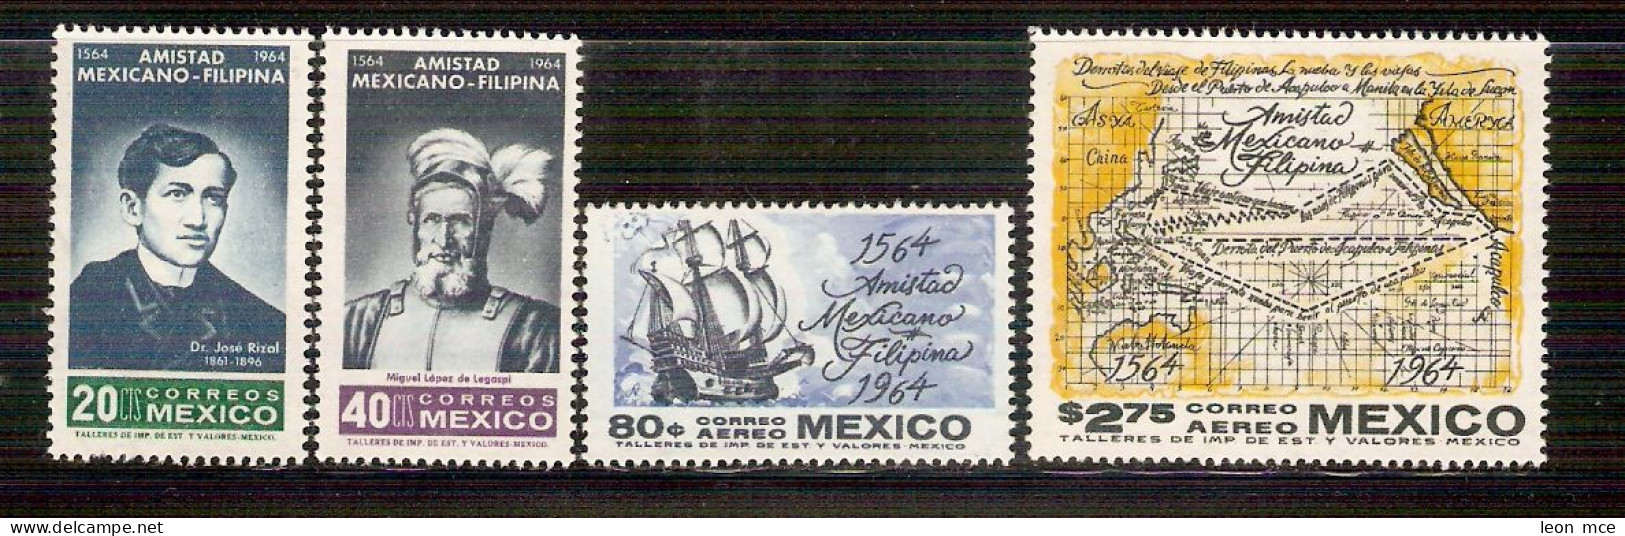 1964 MÉXICO 400 AÑOS AMISTAD MEX. FILIPINAS Sc. 956-957, C300-C301 (4) MNH. 400 YEARS OF MEXICO-PHILIPPINES FRIENDSHIP - Mexico